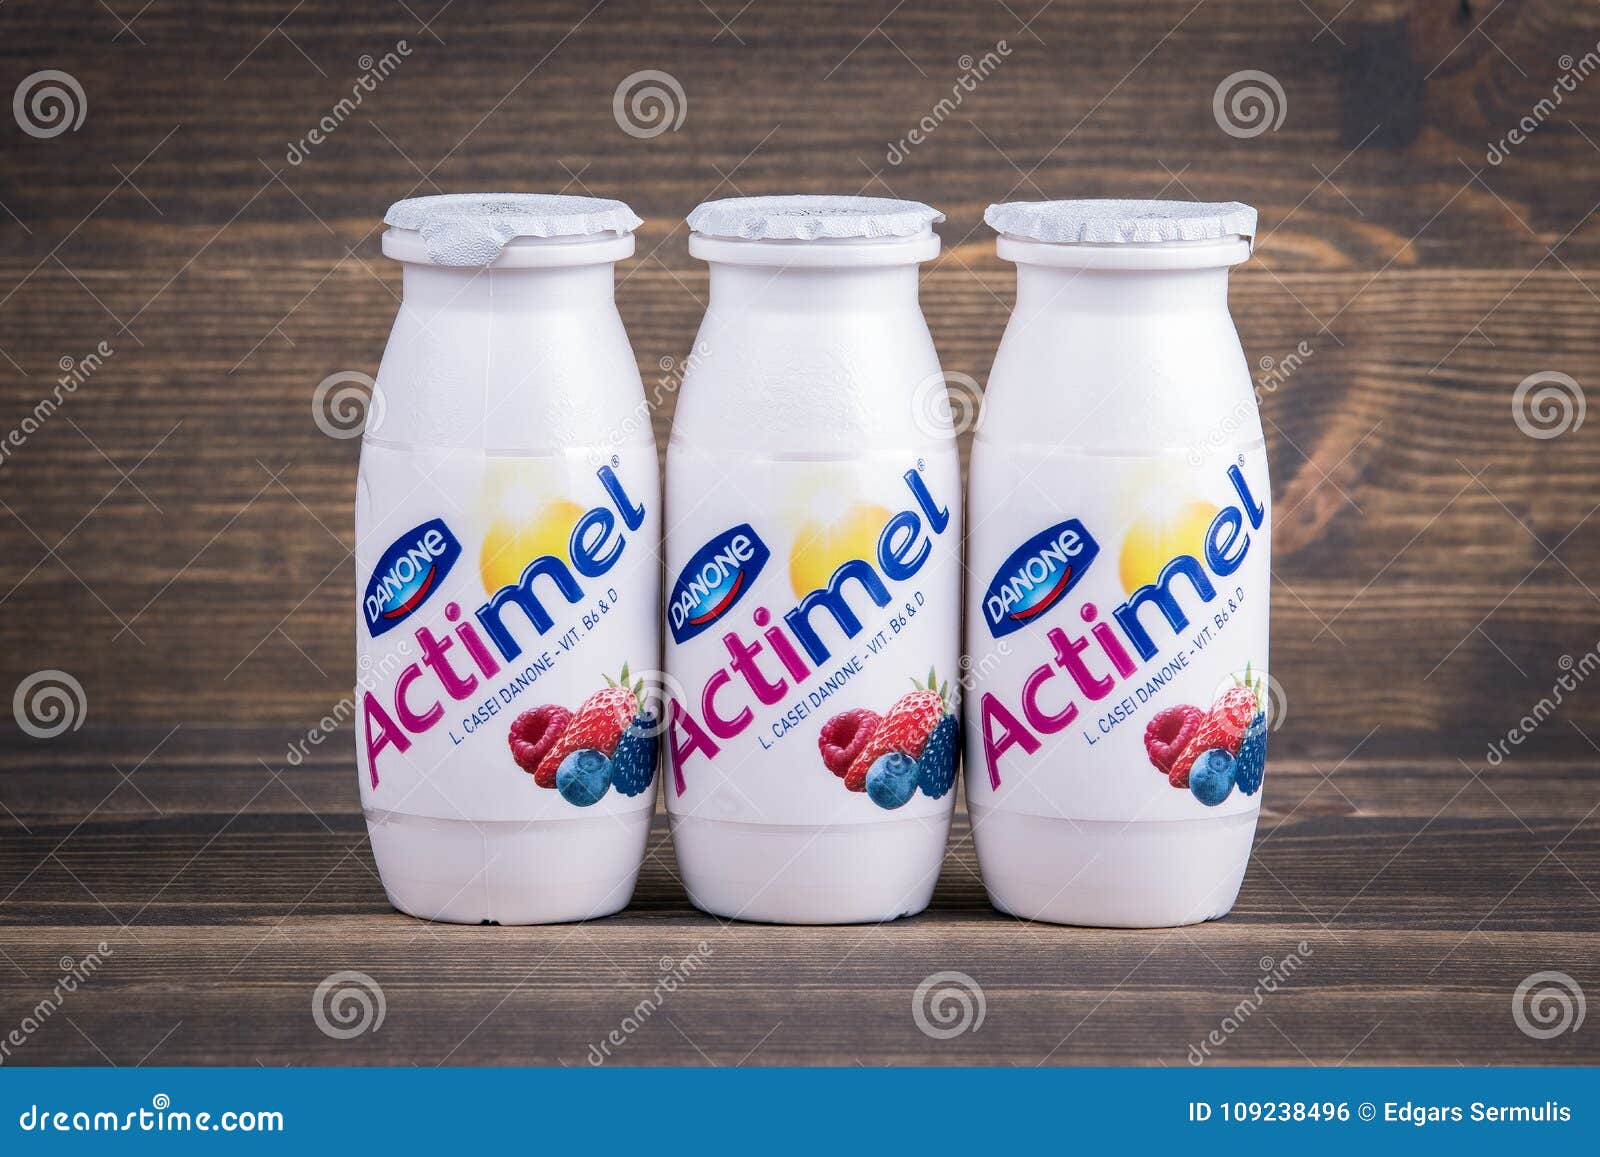 https://thumbs.dreamstime.com/z/riga-latvia-feruary-actimel-probiotic-yogurt-type-drink-produced-danone-109238496.jpg